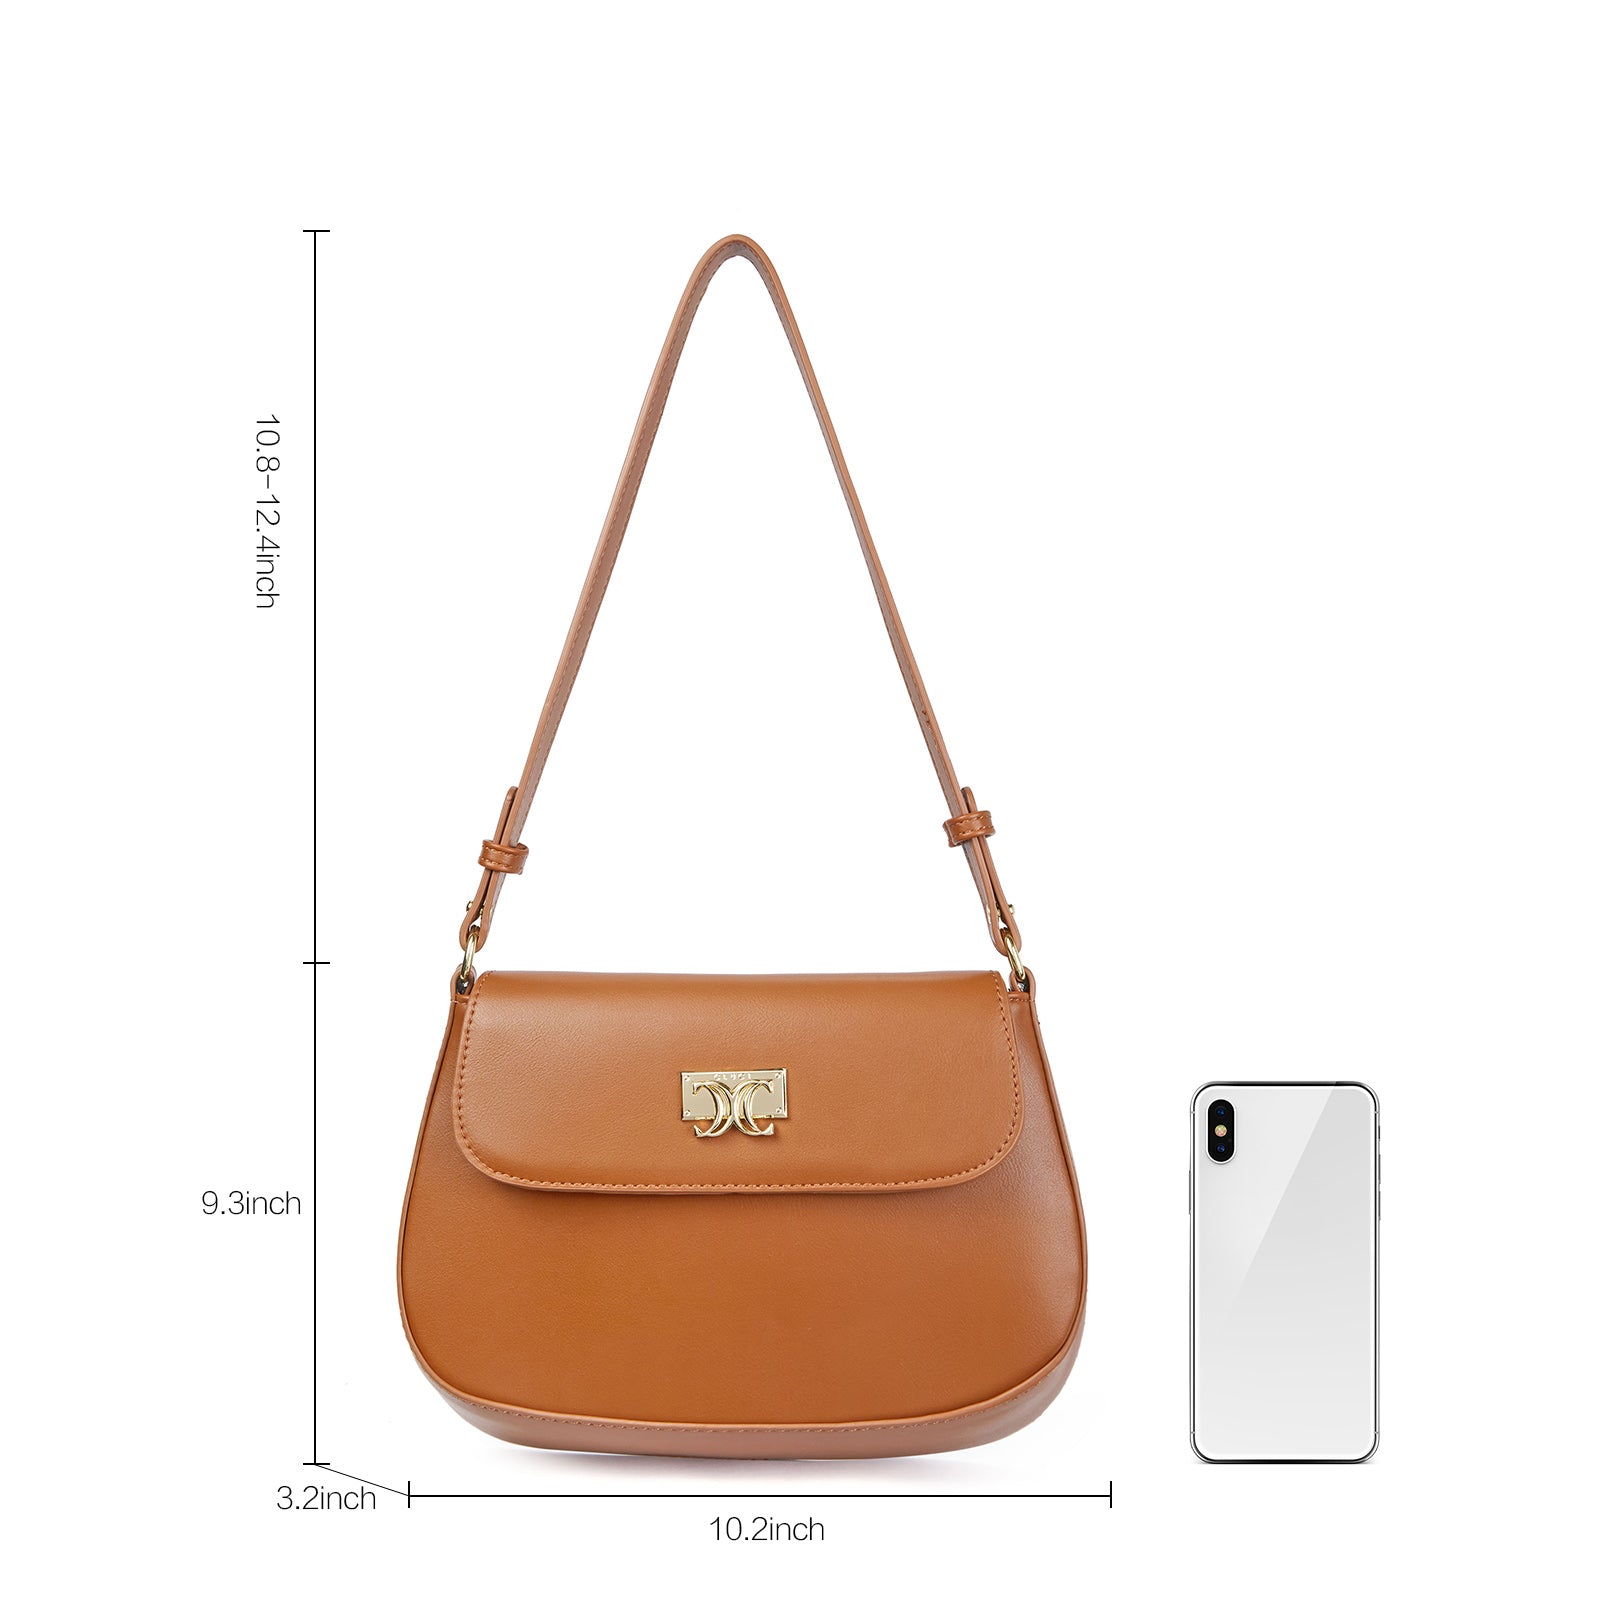 CLUCI Purses for women Small Shoulder Bag Cute Clutch Designer Tote Ha